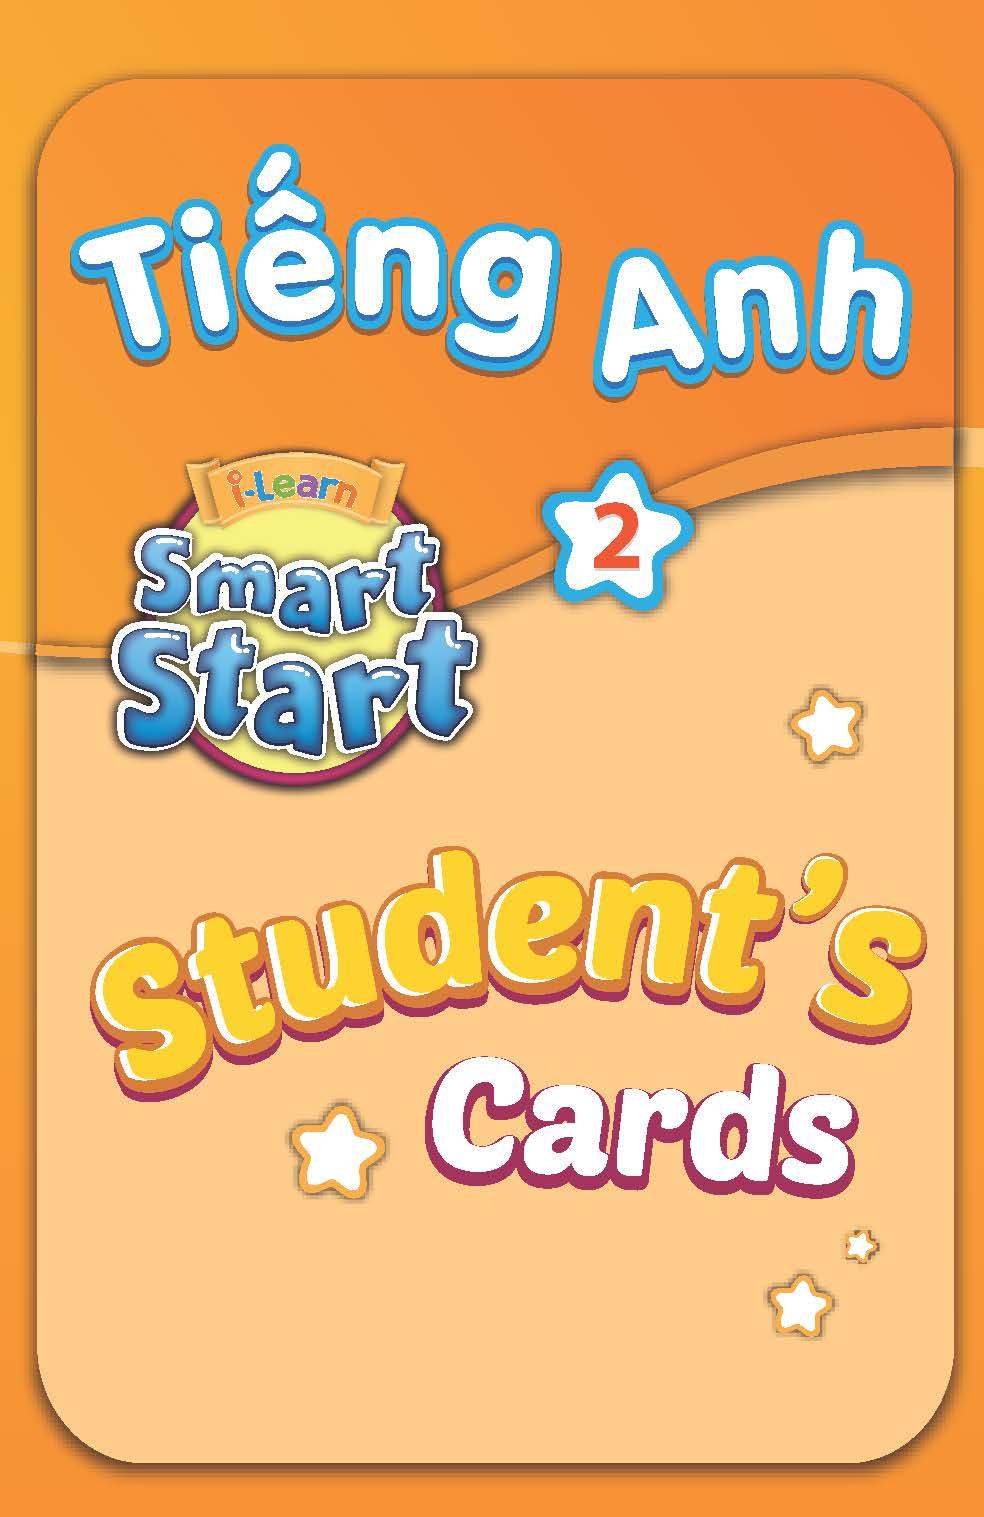 Tiếng Anh 2 i-Learn Smart Start – Student's Cards (Tranh hình mini)